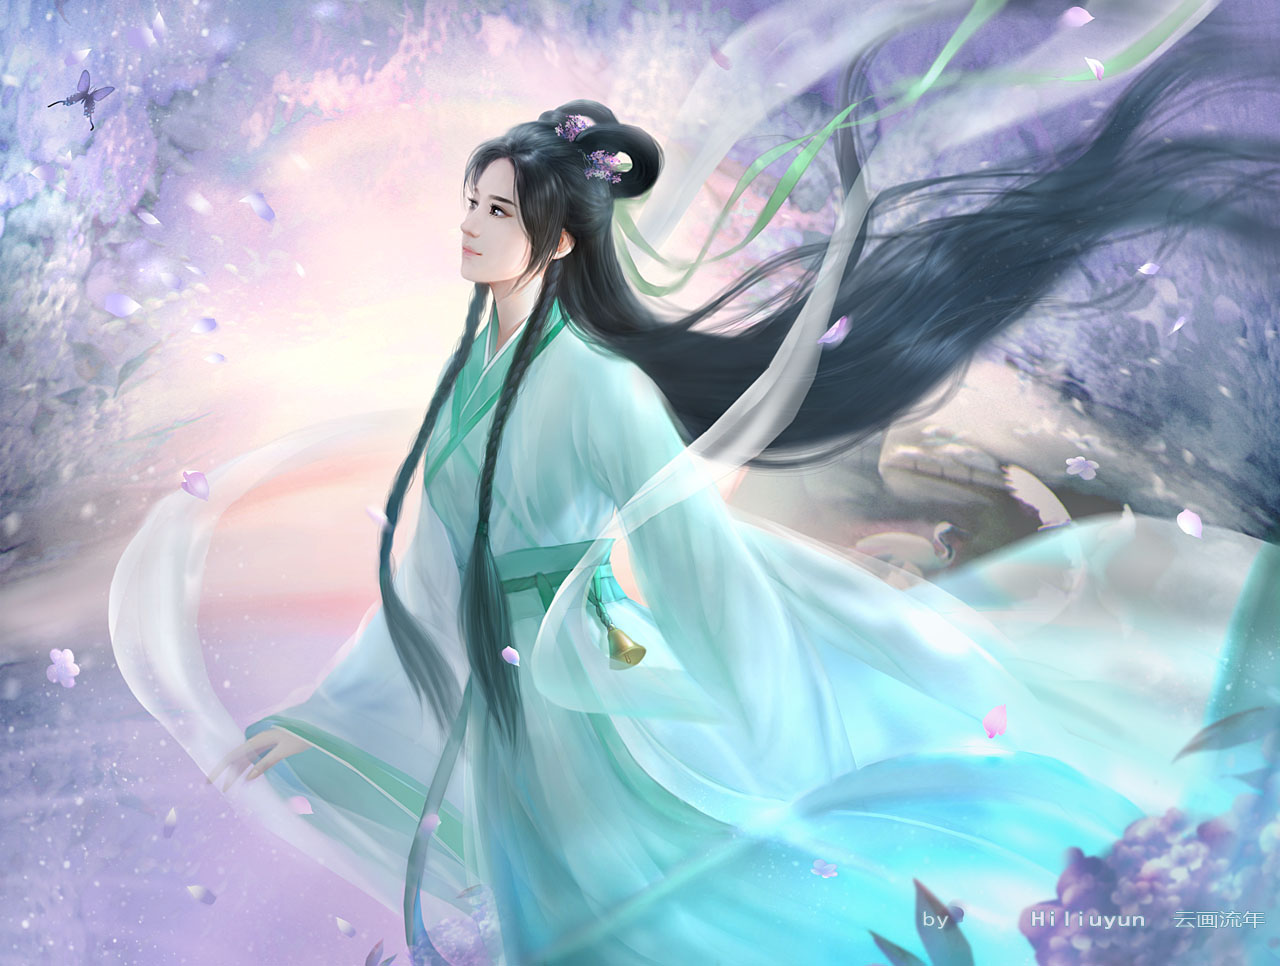 General 1280x966 Wuxia digital art CGI original characters fantasy girl hiLiuyun